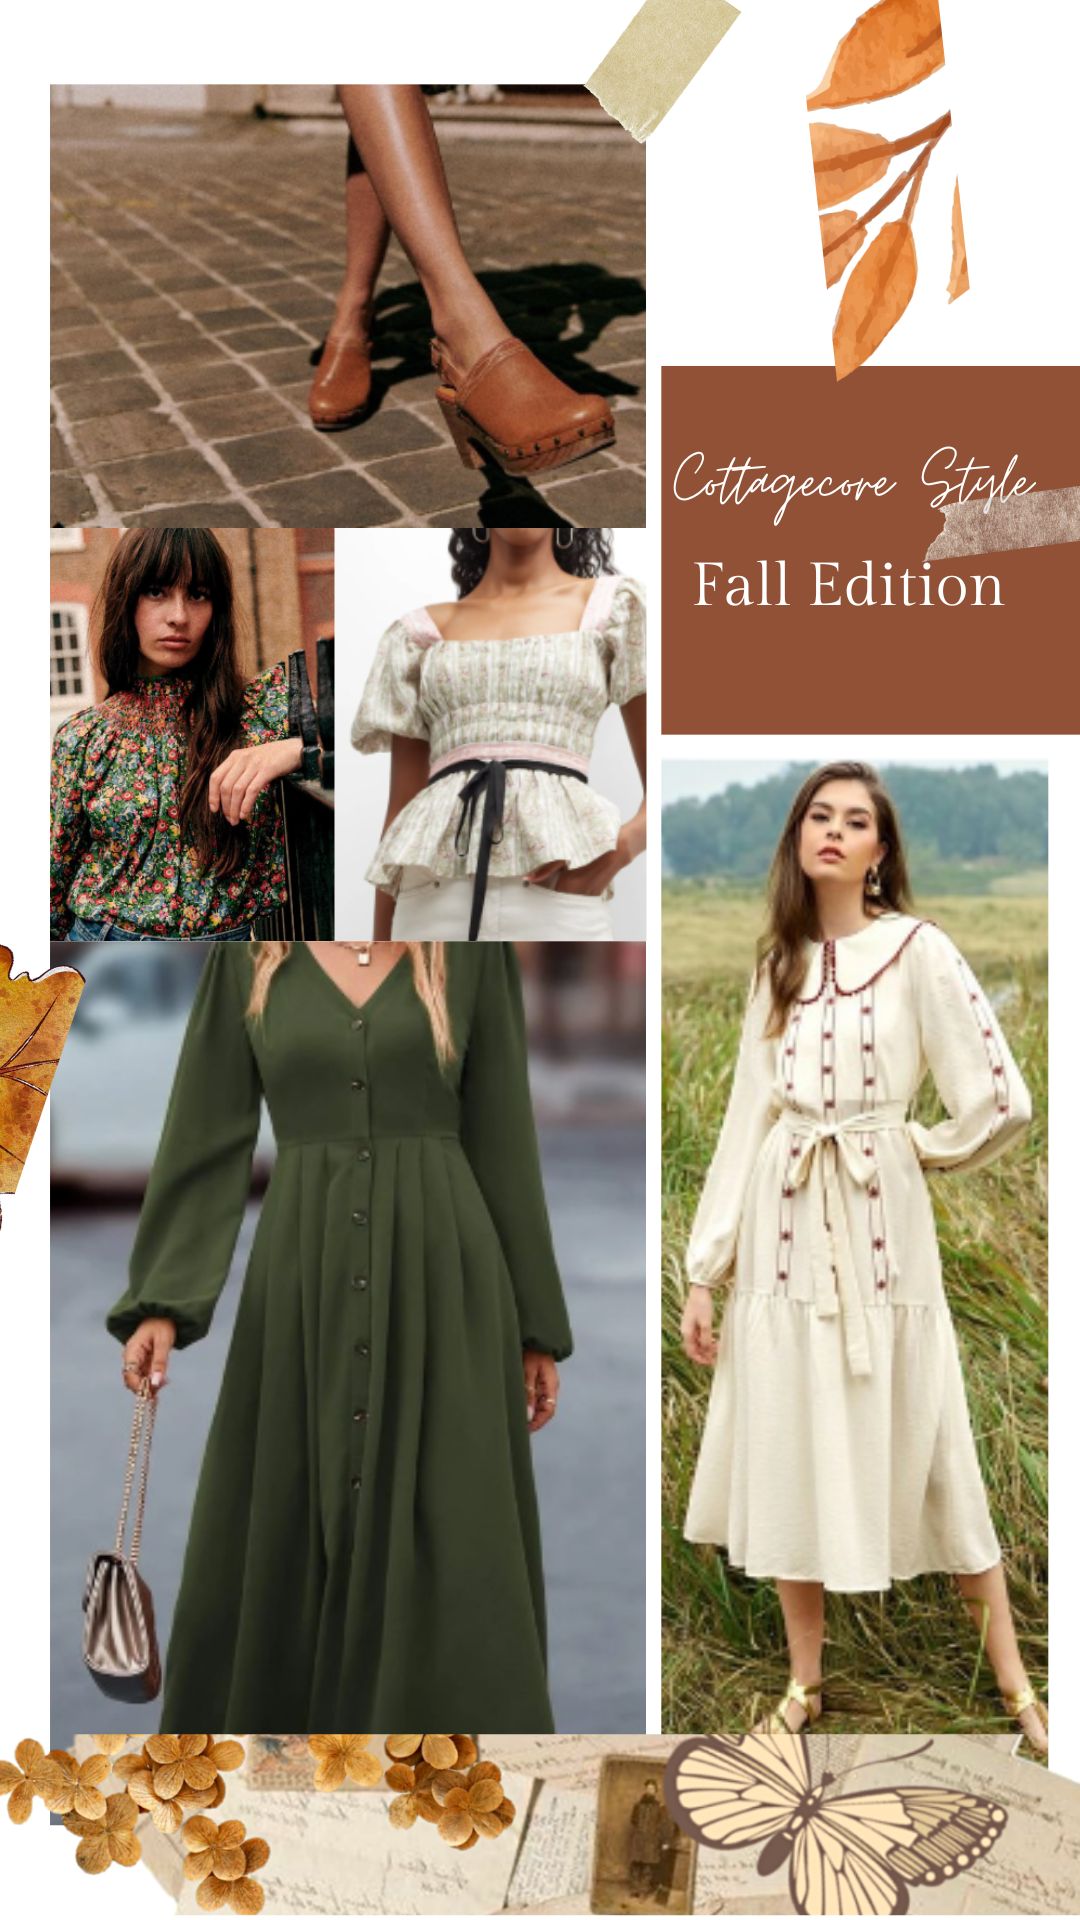 Cottagecore Style Fall Edition